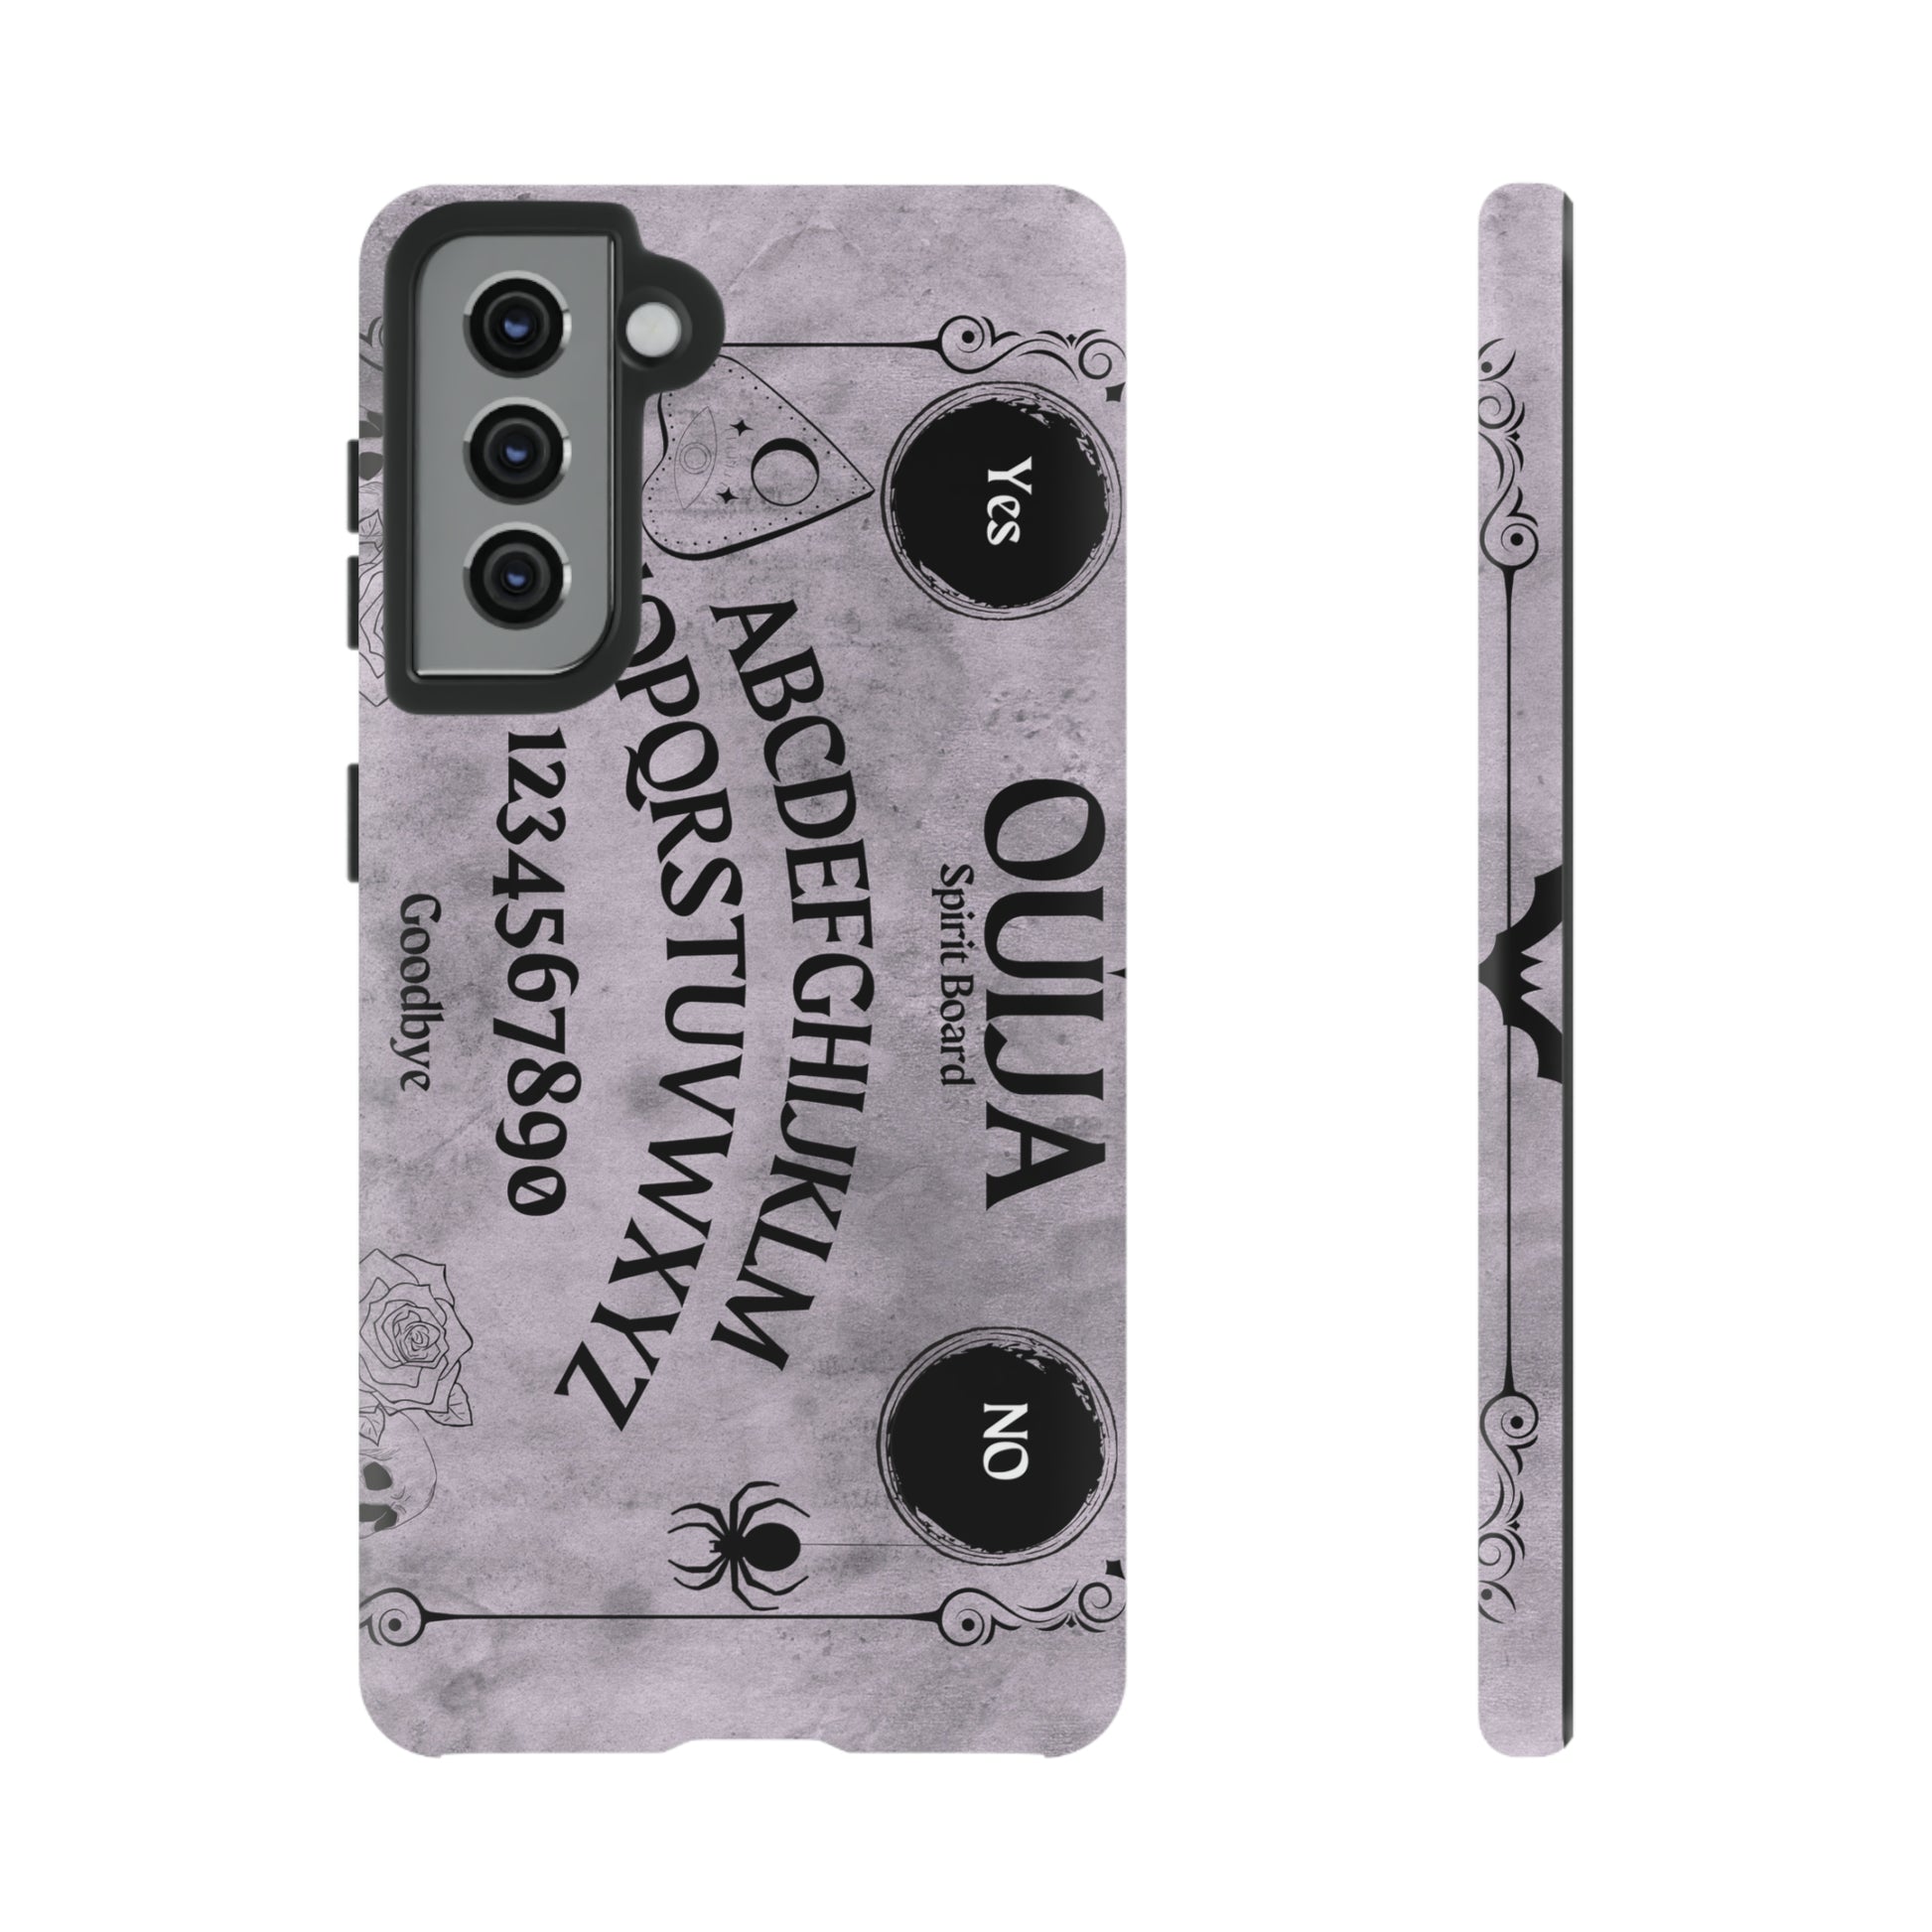 Ouija Board Tough Phone Cases For Samsung iPhone GooglePhone CaseVTZdesignsSamsung Galaxy S21MatteAccessoriesGlossyhalloween